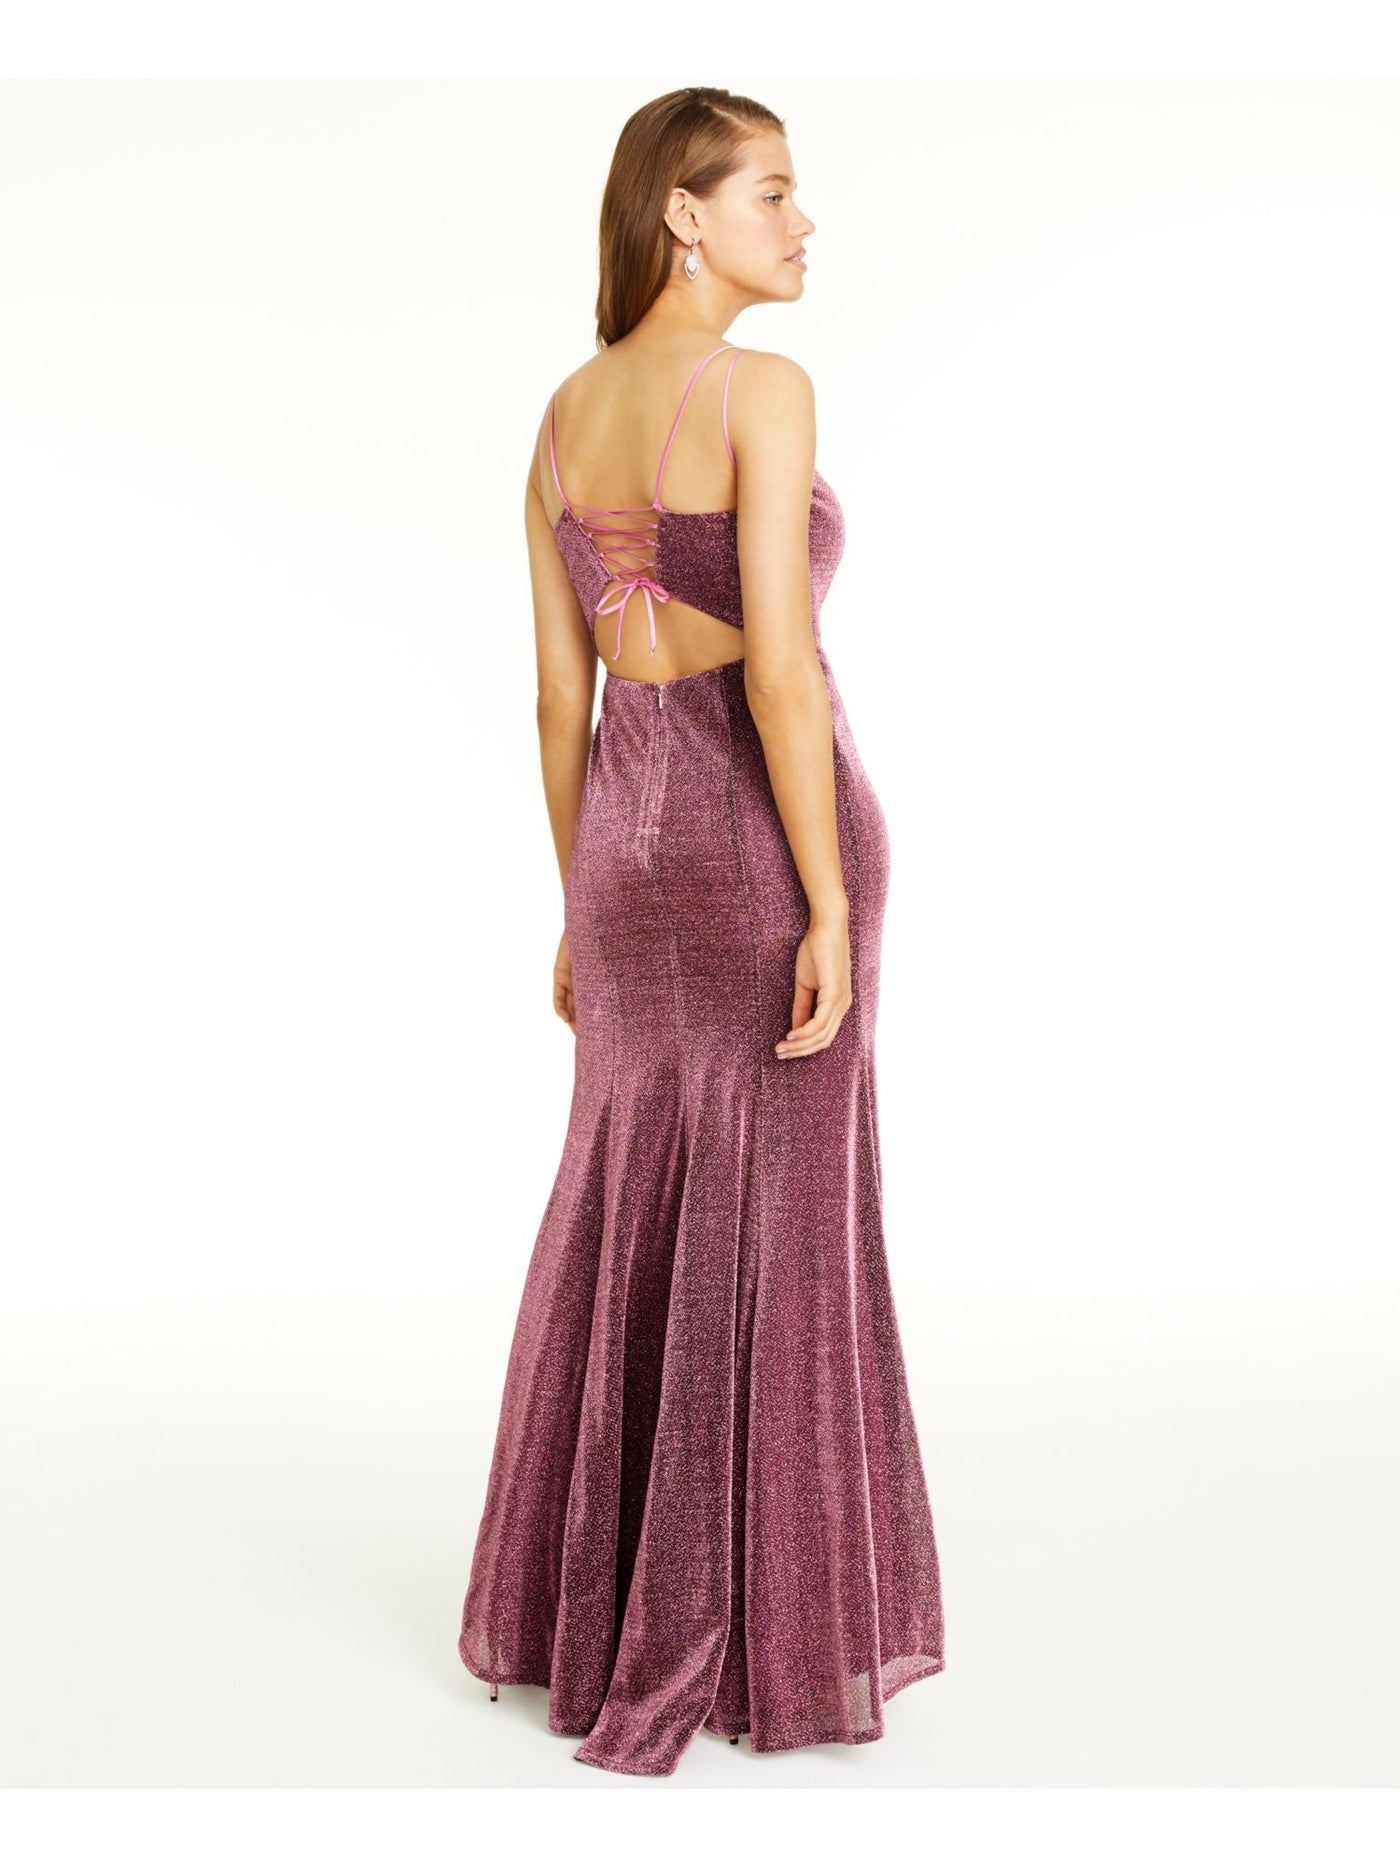 CRYSTAL DOLLS Womens Purple Embellished Spaghetti Strap Sweetheart Neckline Full-Length Formal Fit + Flare Dress Juniors 9